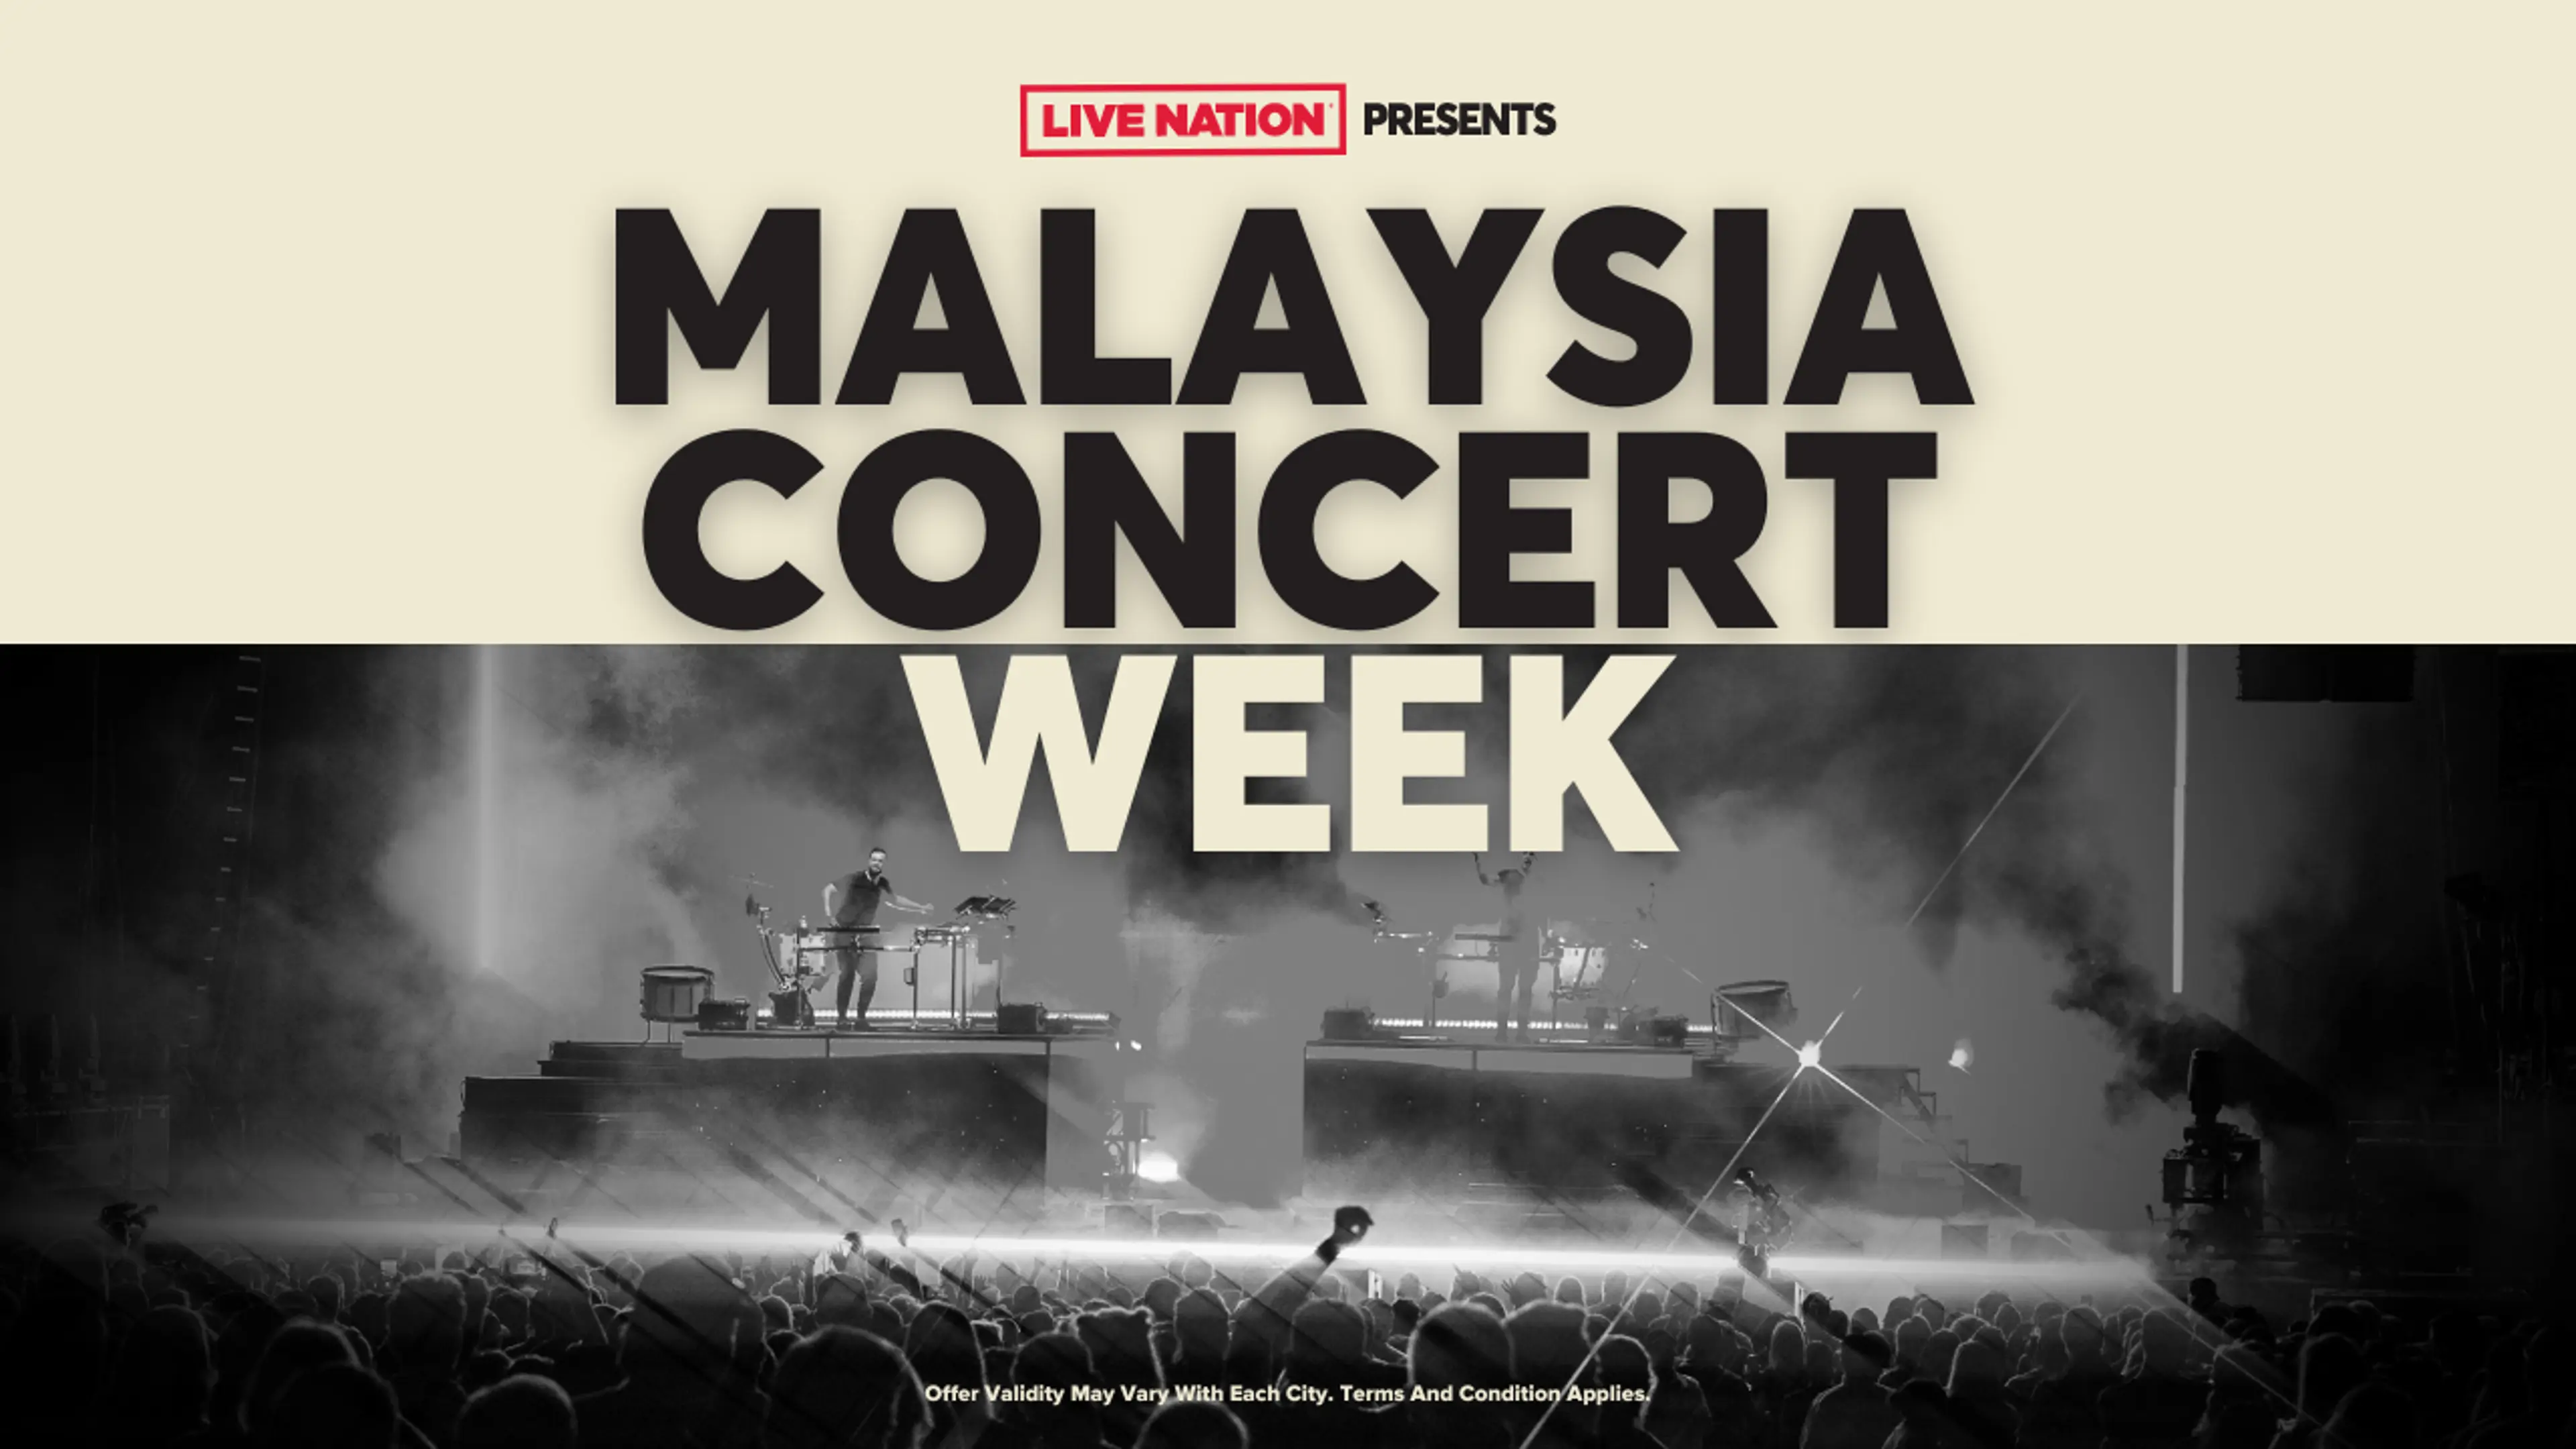 Malaysia Concert Week